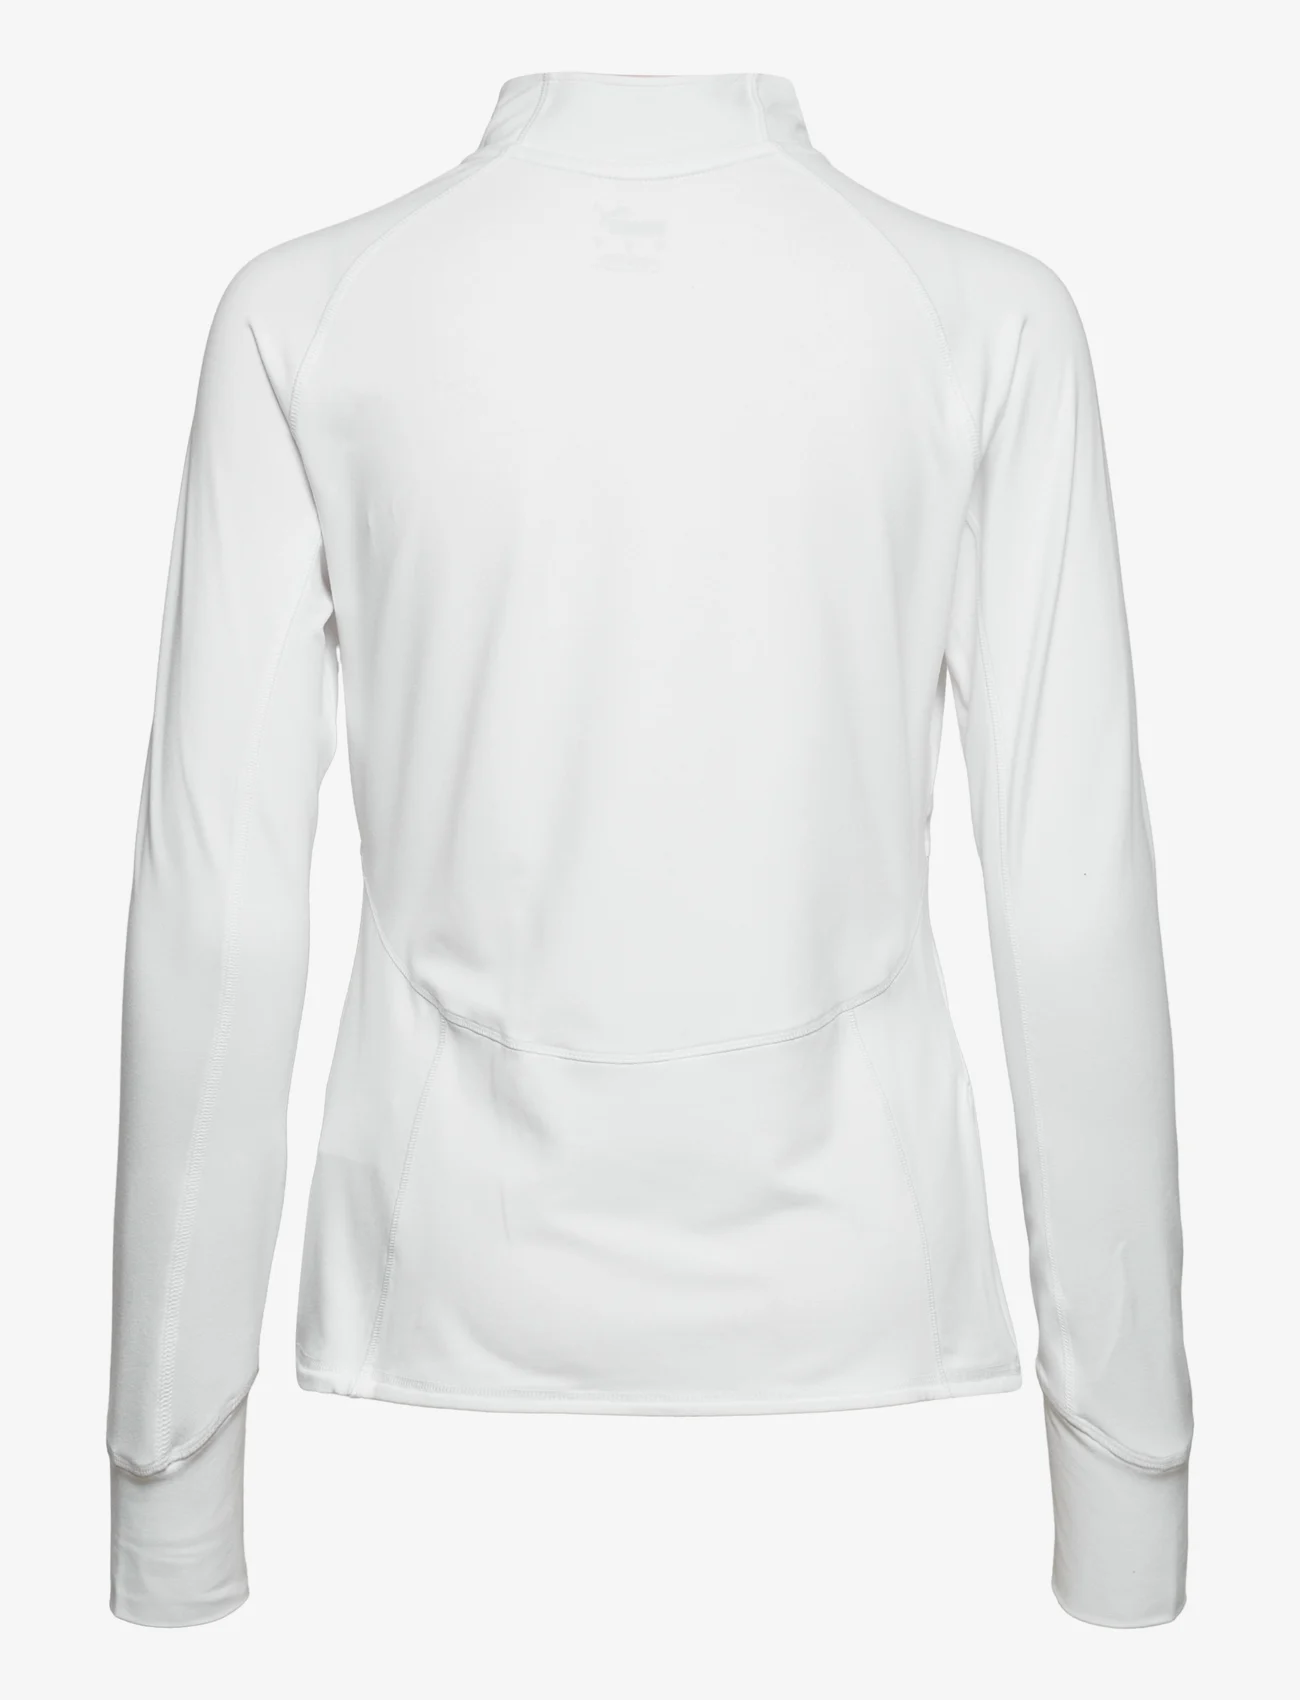 PUMA Golf - W Gamer 1/4 Zip - sweatshirts - bright white - 1